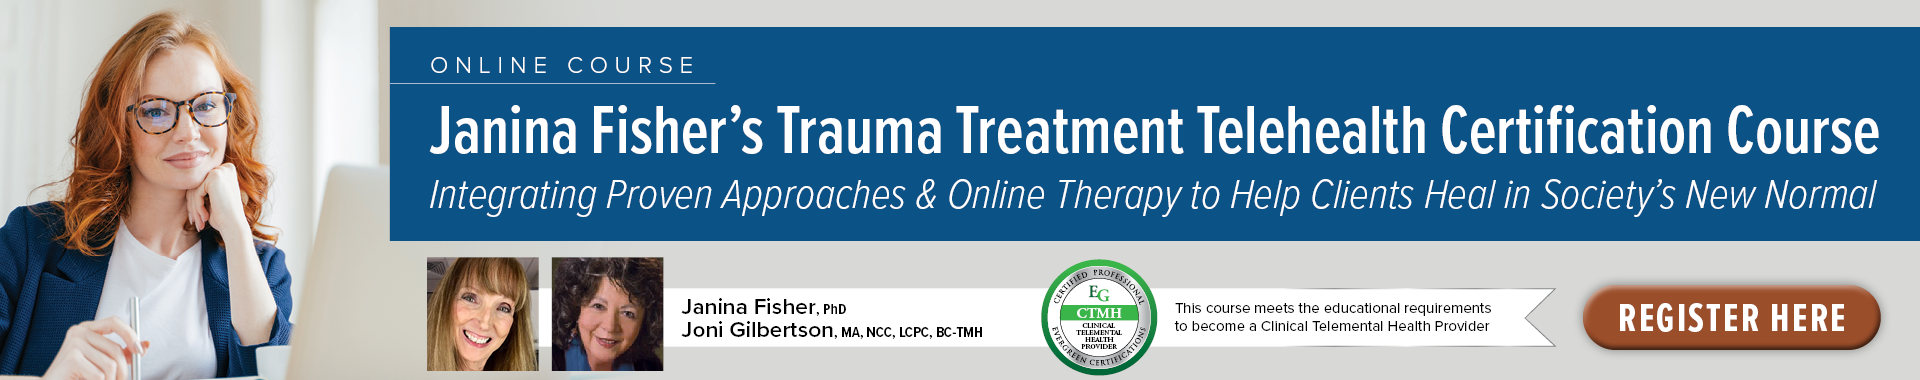 Janina Fisher’s Trauma Treatment Telehealth Certification Course